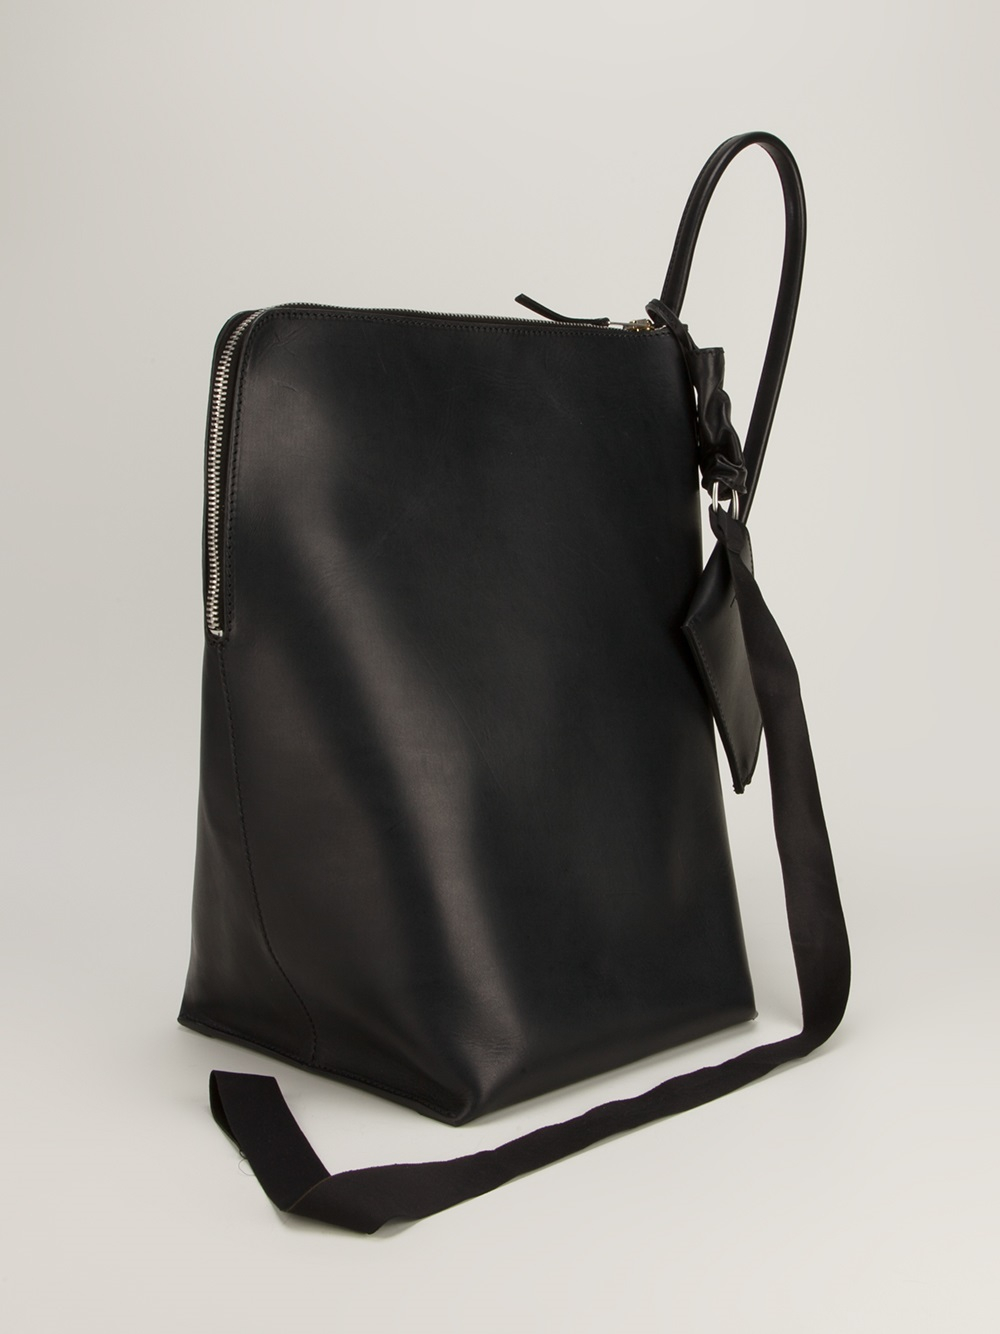 Lyst - Rick Owens Single Strap Backpack in Black